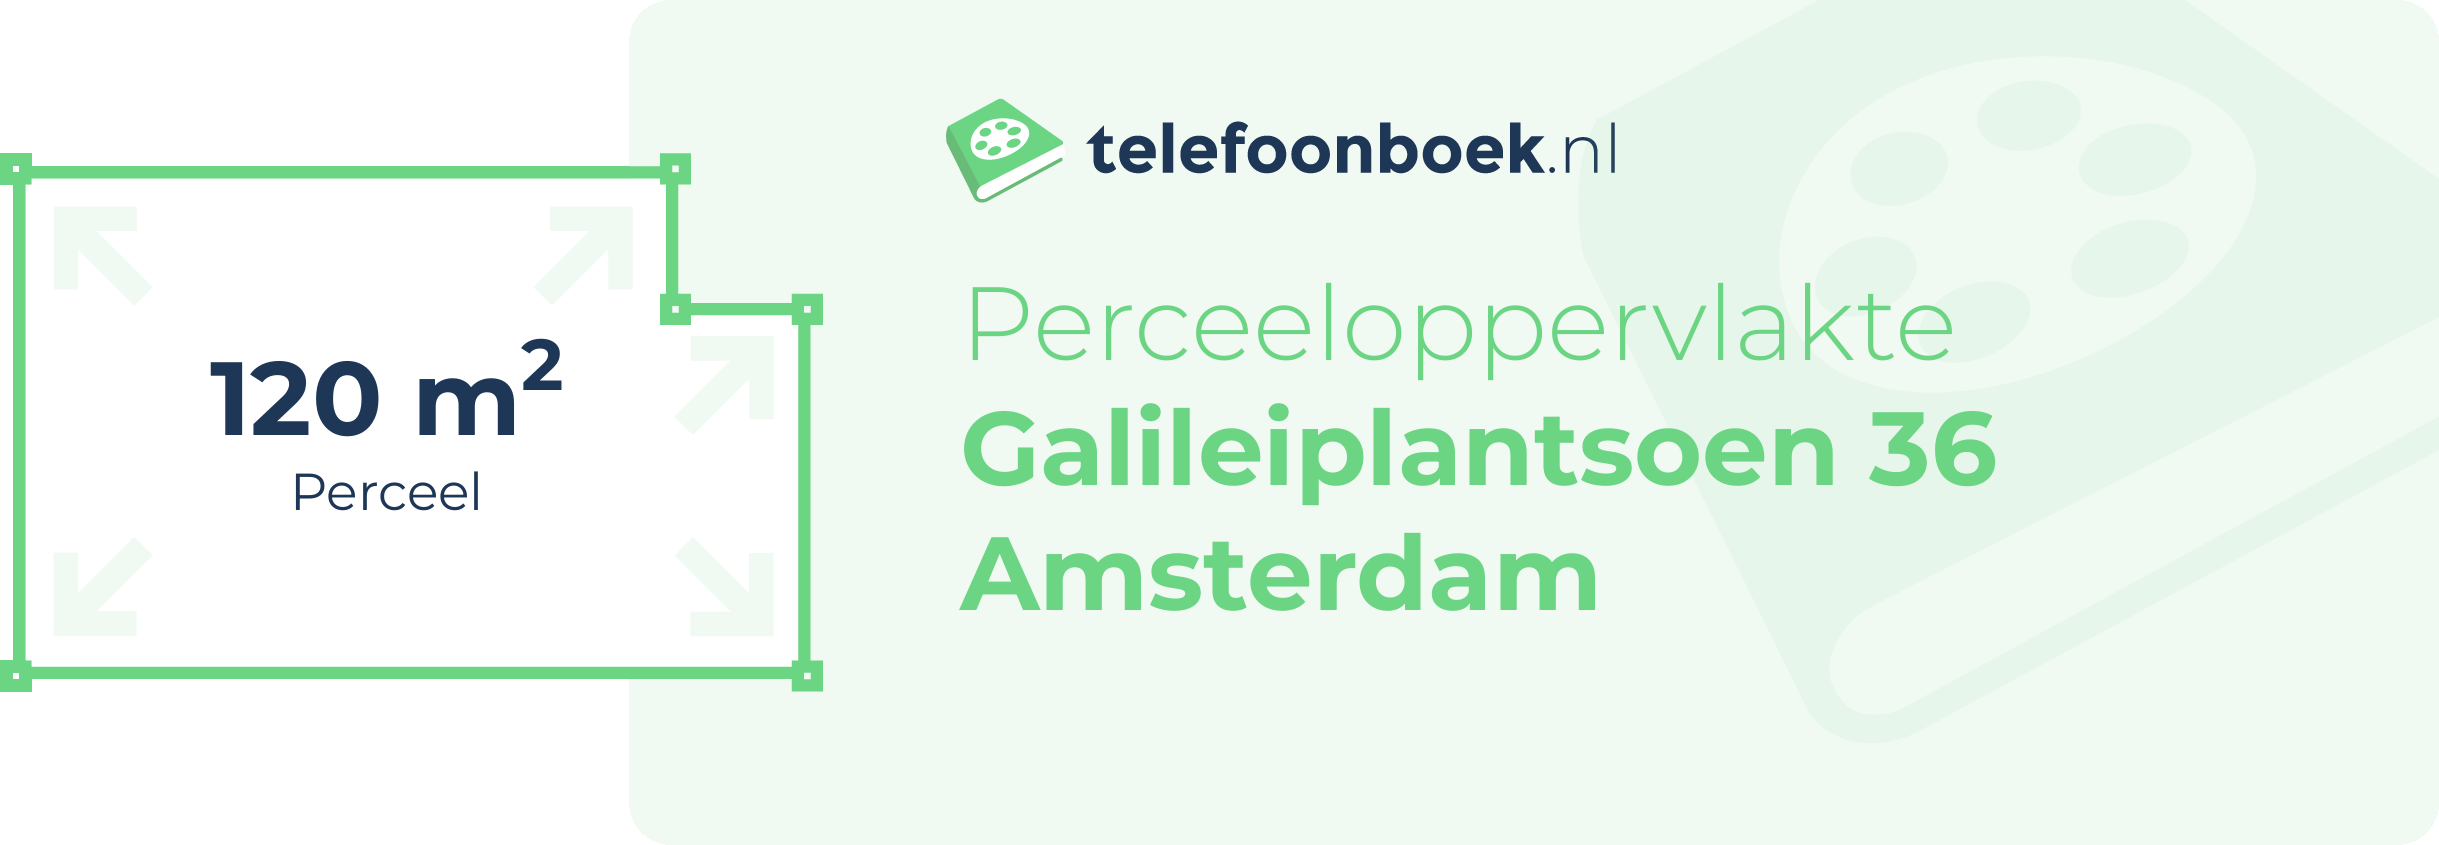 Perceeloppervlakte Galileiplantsoen 36 Amsterdam